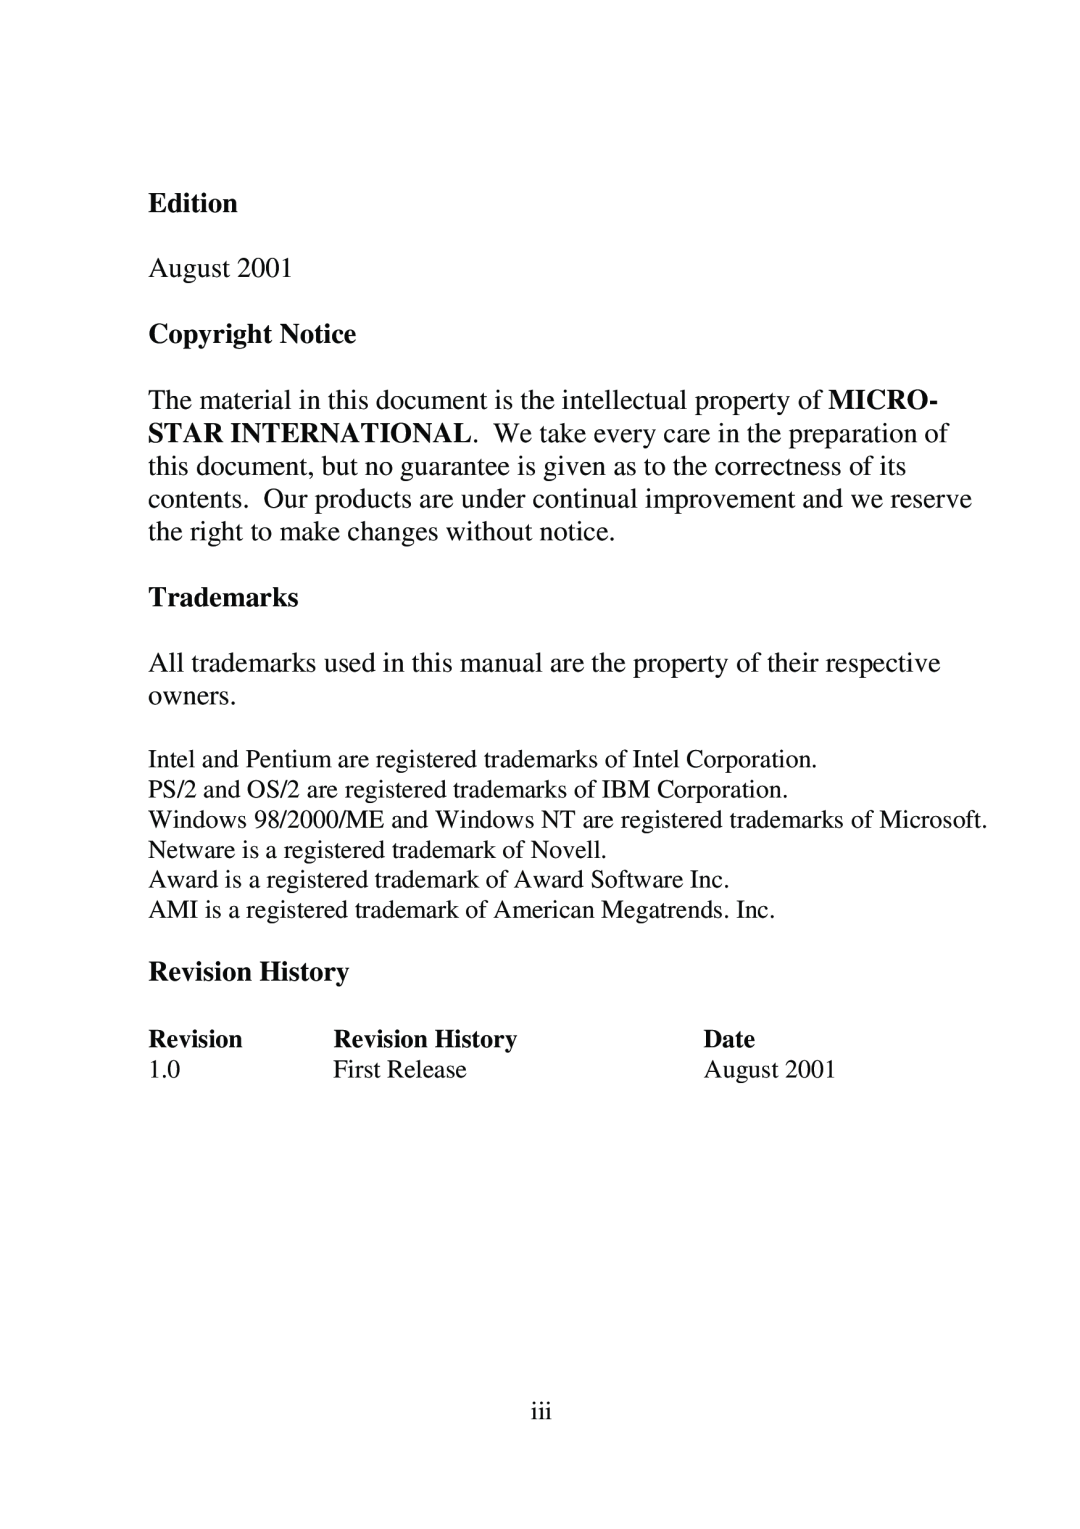 Premio Computer Aries/Centella manual Edition, Copyright Notice, Trademarks, Revision History 